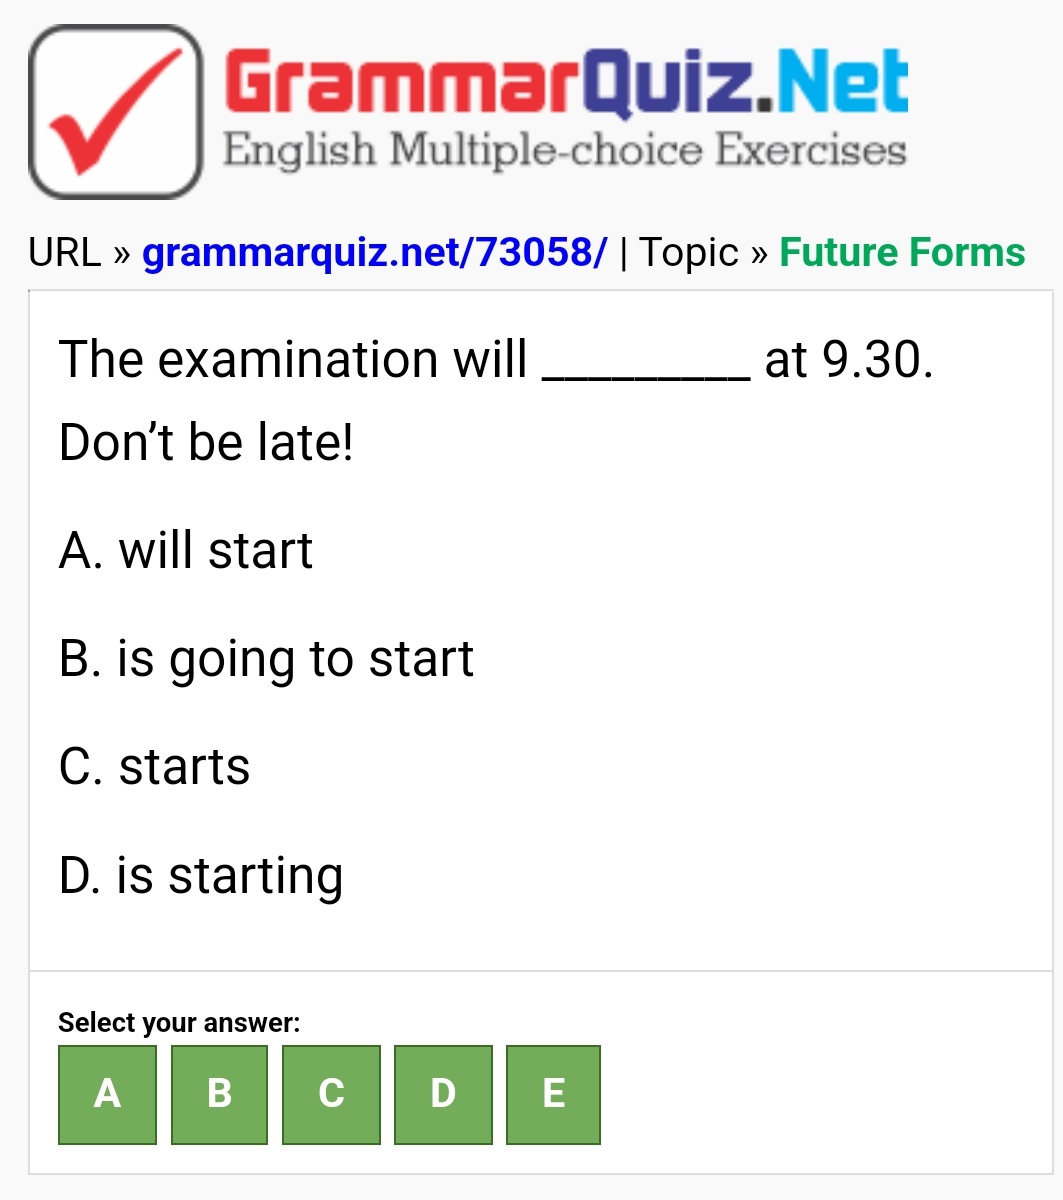 What is the correct answer? grammarquiz.net/73058/ #englishgrammarquiz #englishgrammarexercise #englishclub #quizoftheday #englishcourse #englishlanguage #easyenglish #toefl #toeic #ielts